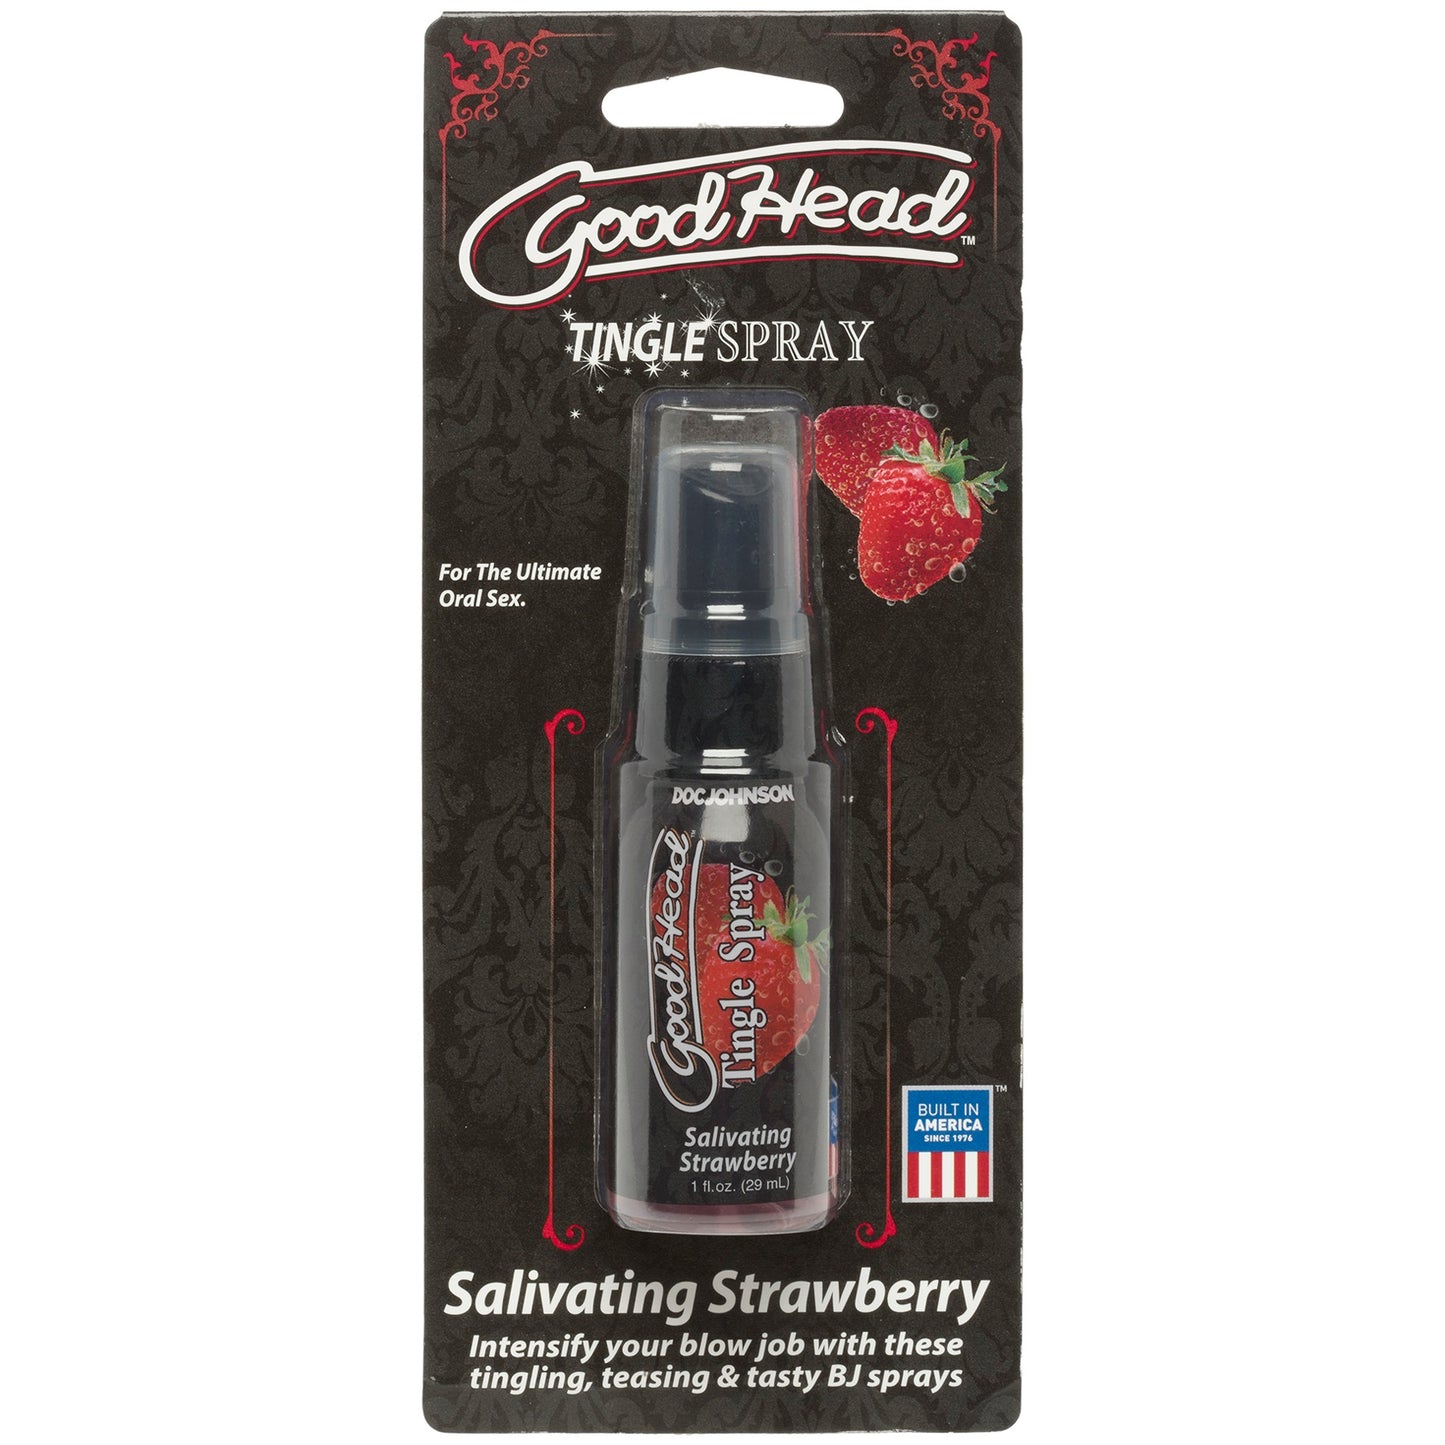 Goodhead - Tingle Spray - 1 Fl. Oz. Salivating  Strawberry